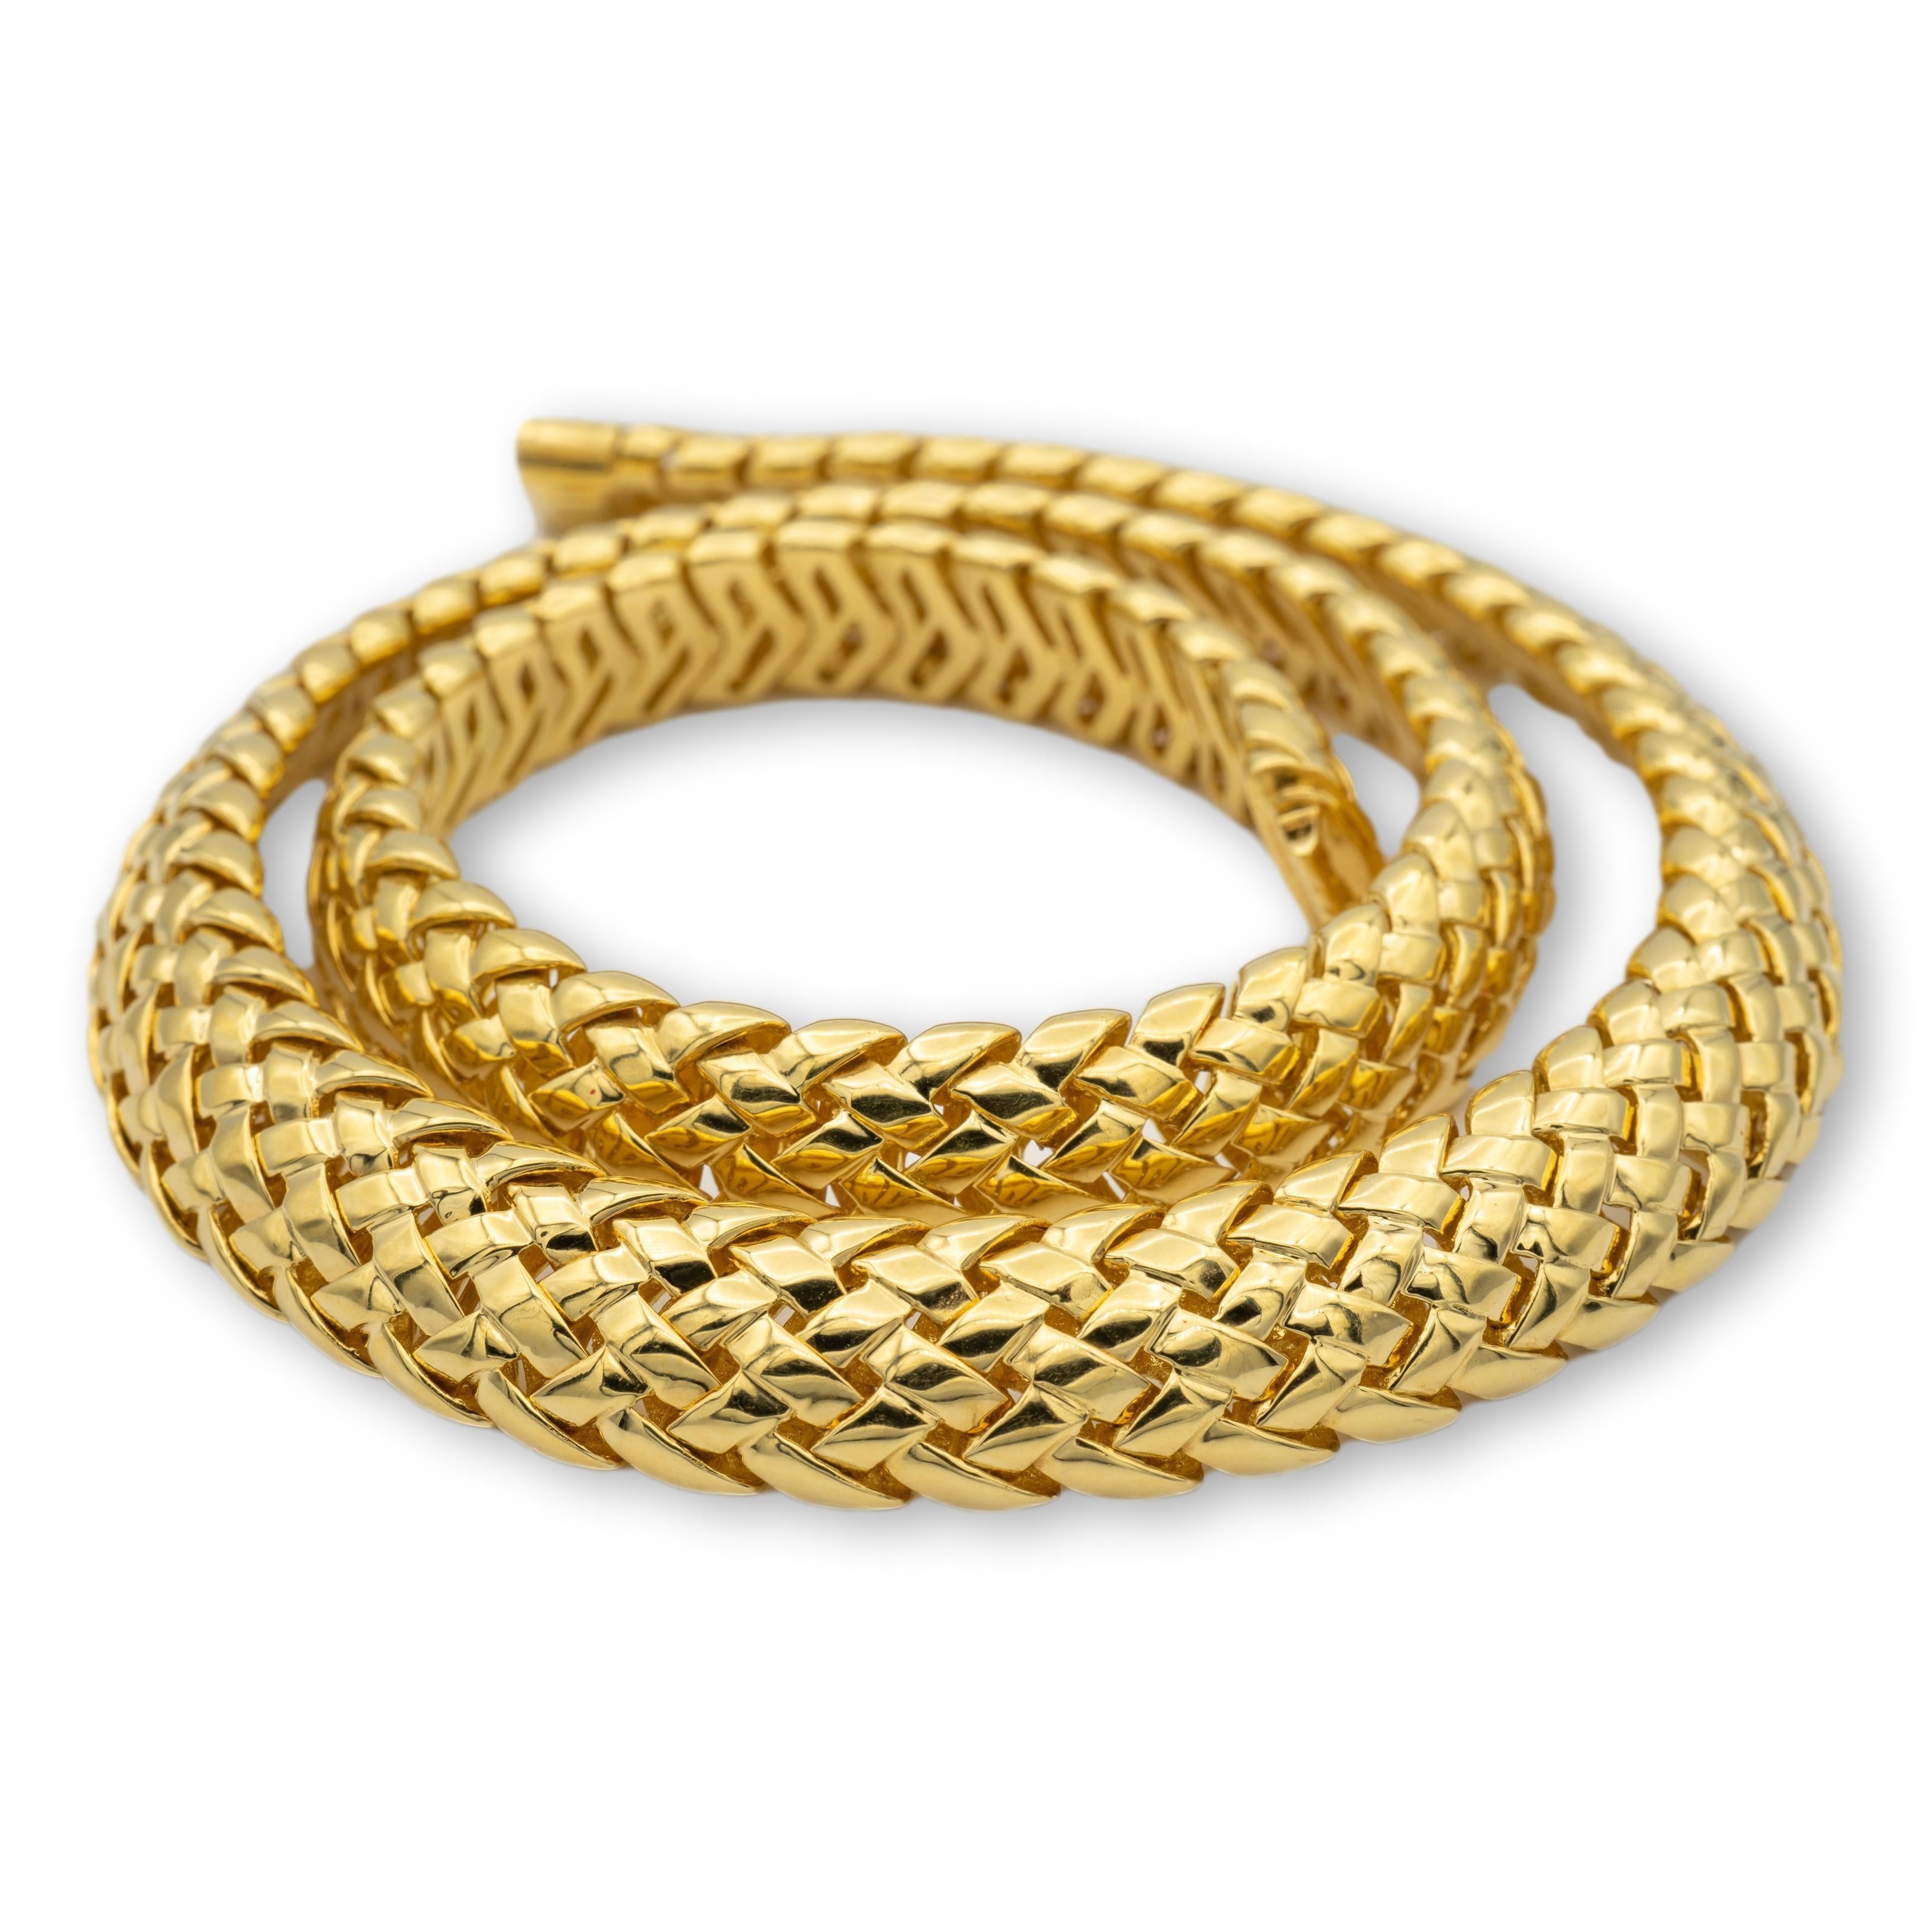 Tiffany & Co. Golding Co. 18KY Vannerie Vintage Basket Weave Choker Necklace 17